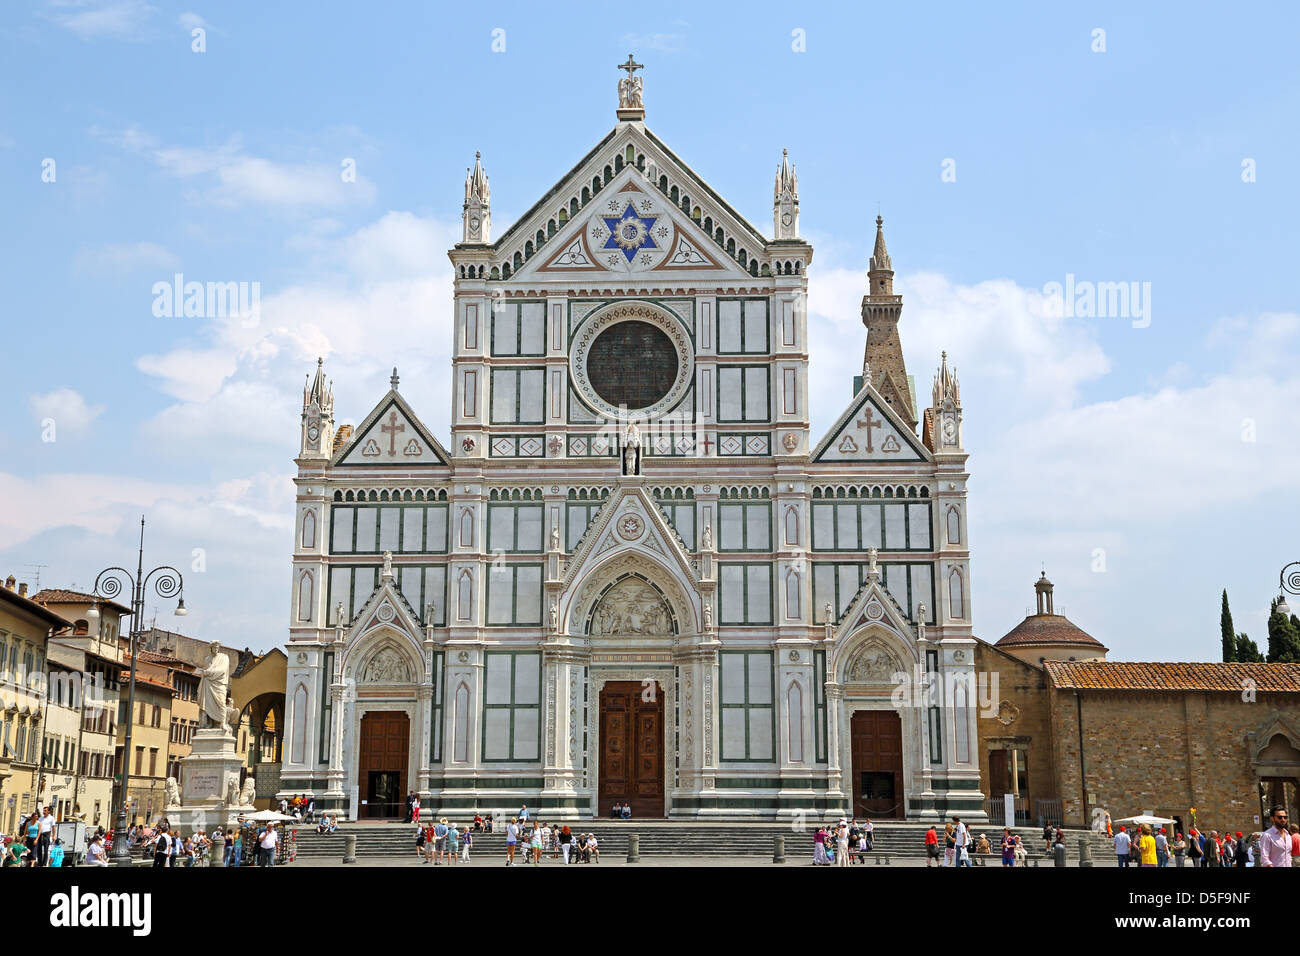 Basilica Santa Croce in Florence Italy Stock Photo